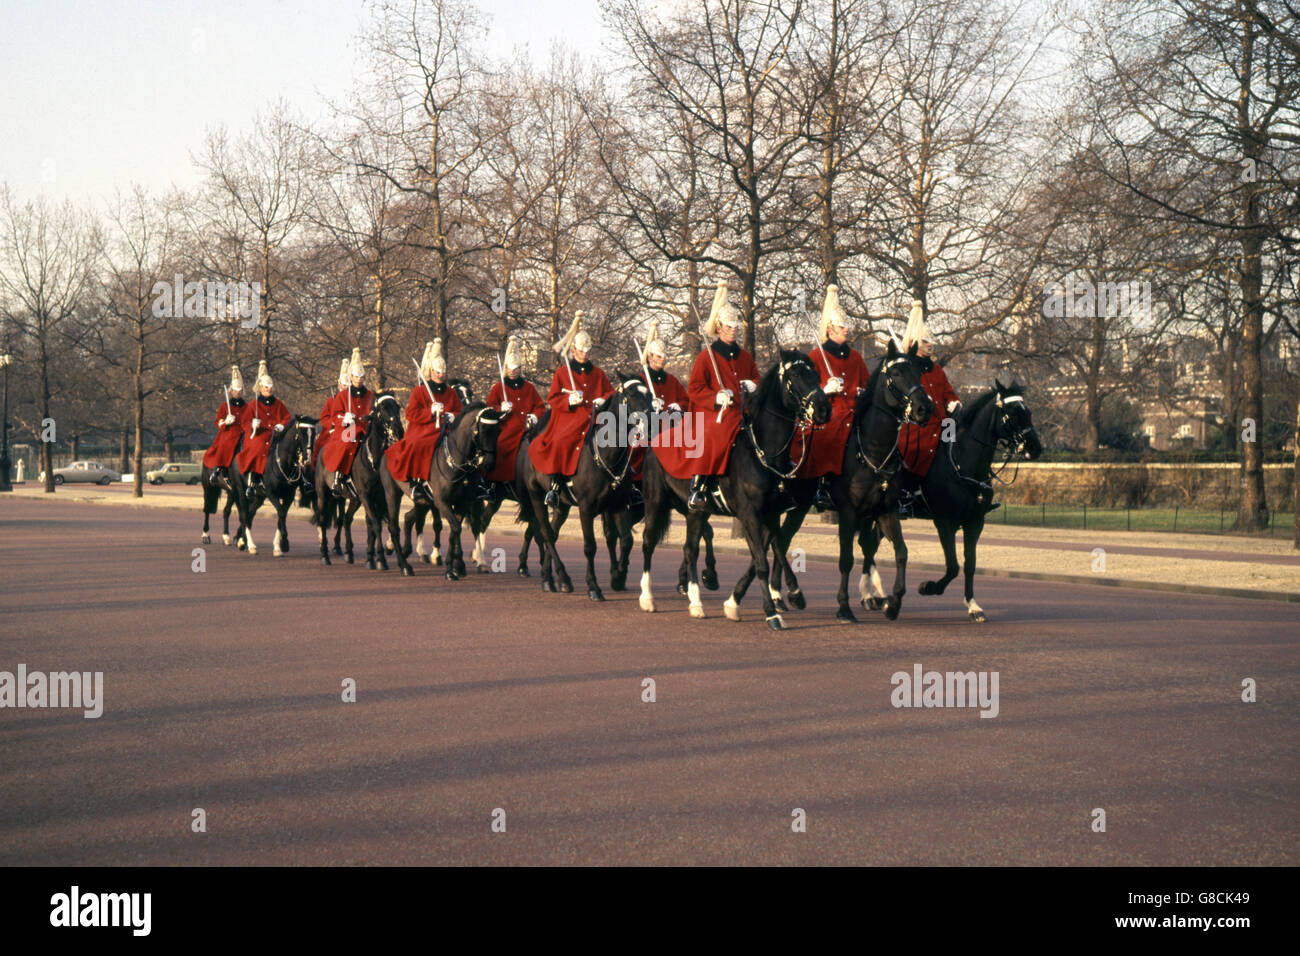 Szenen Aus London - Haushaltskavallerie. Die Kavallerie des Hauses reitet entlang der Mall. Stockfoto